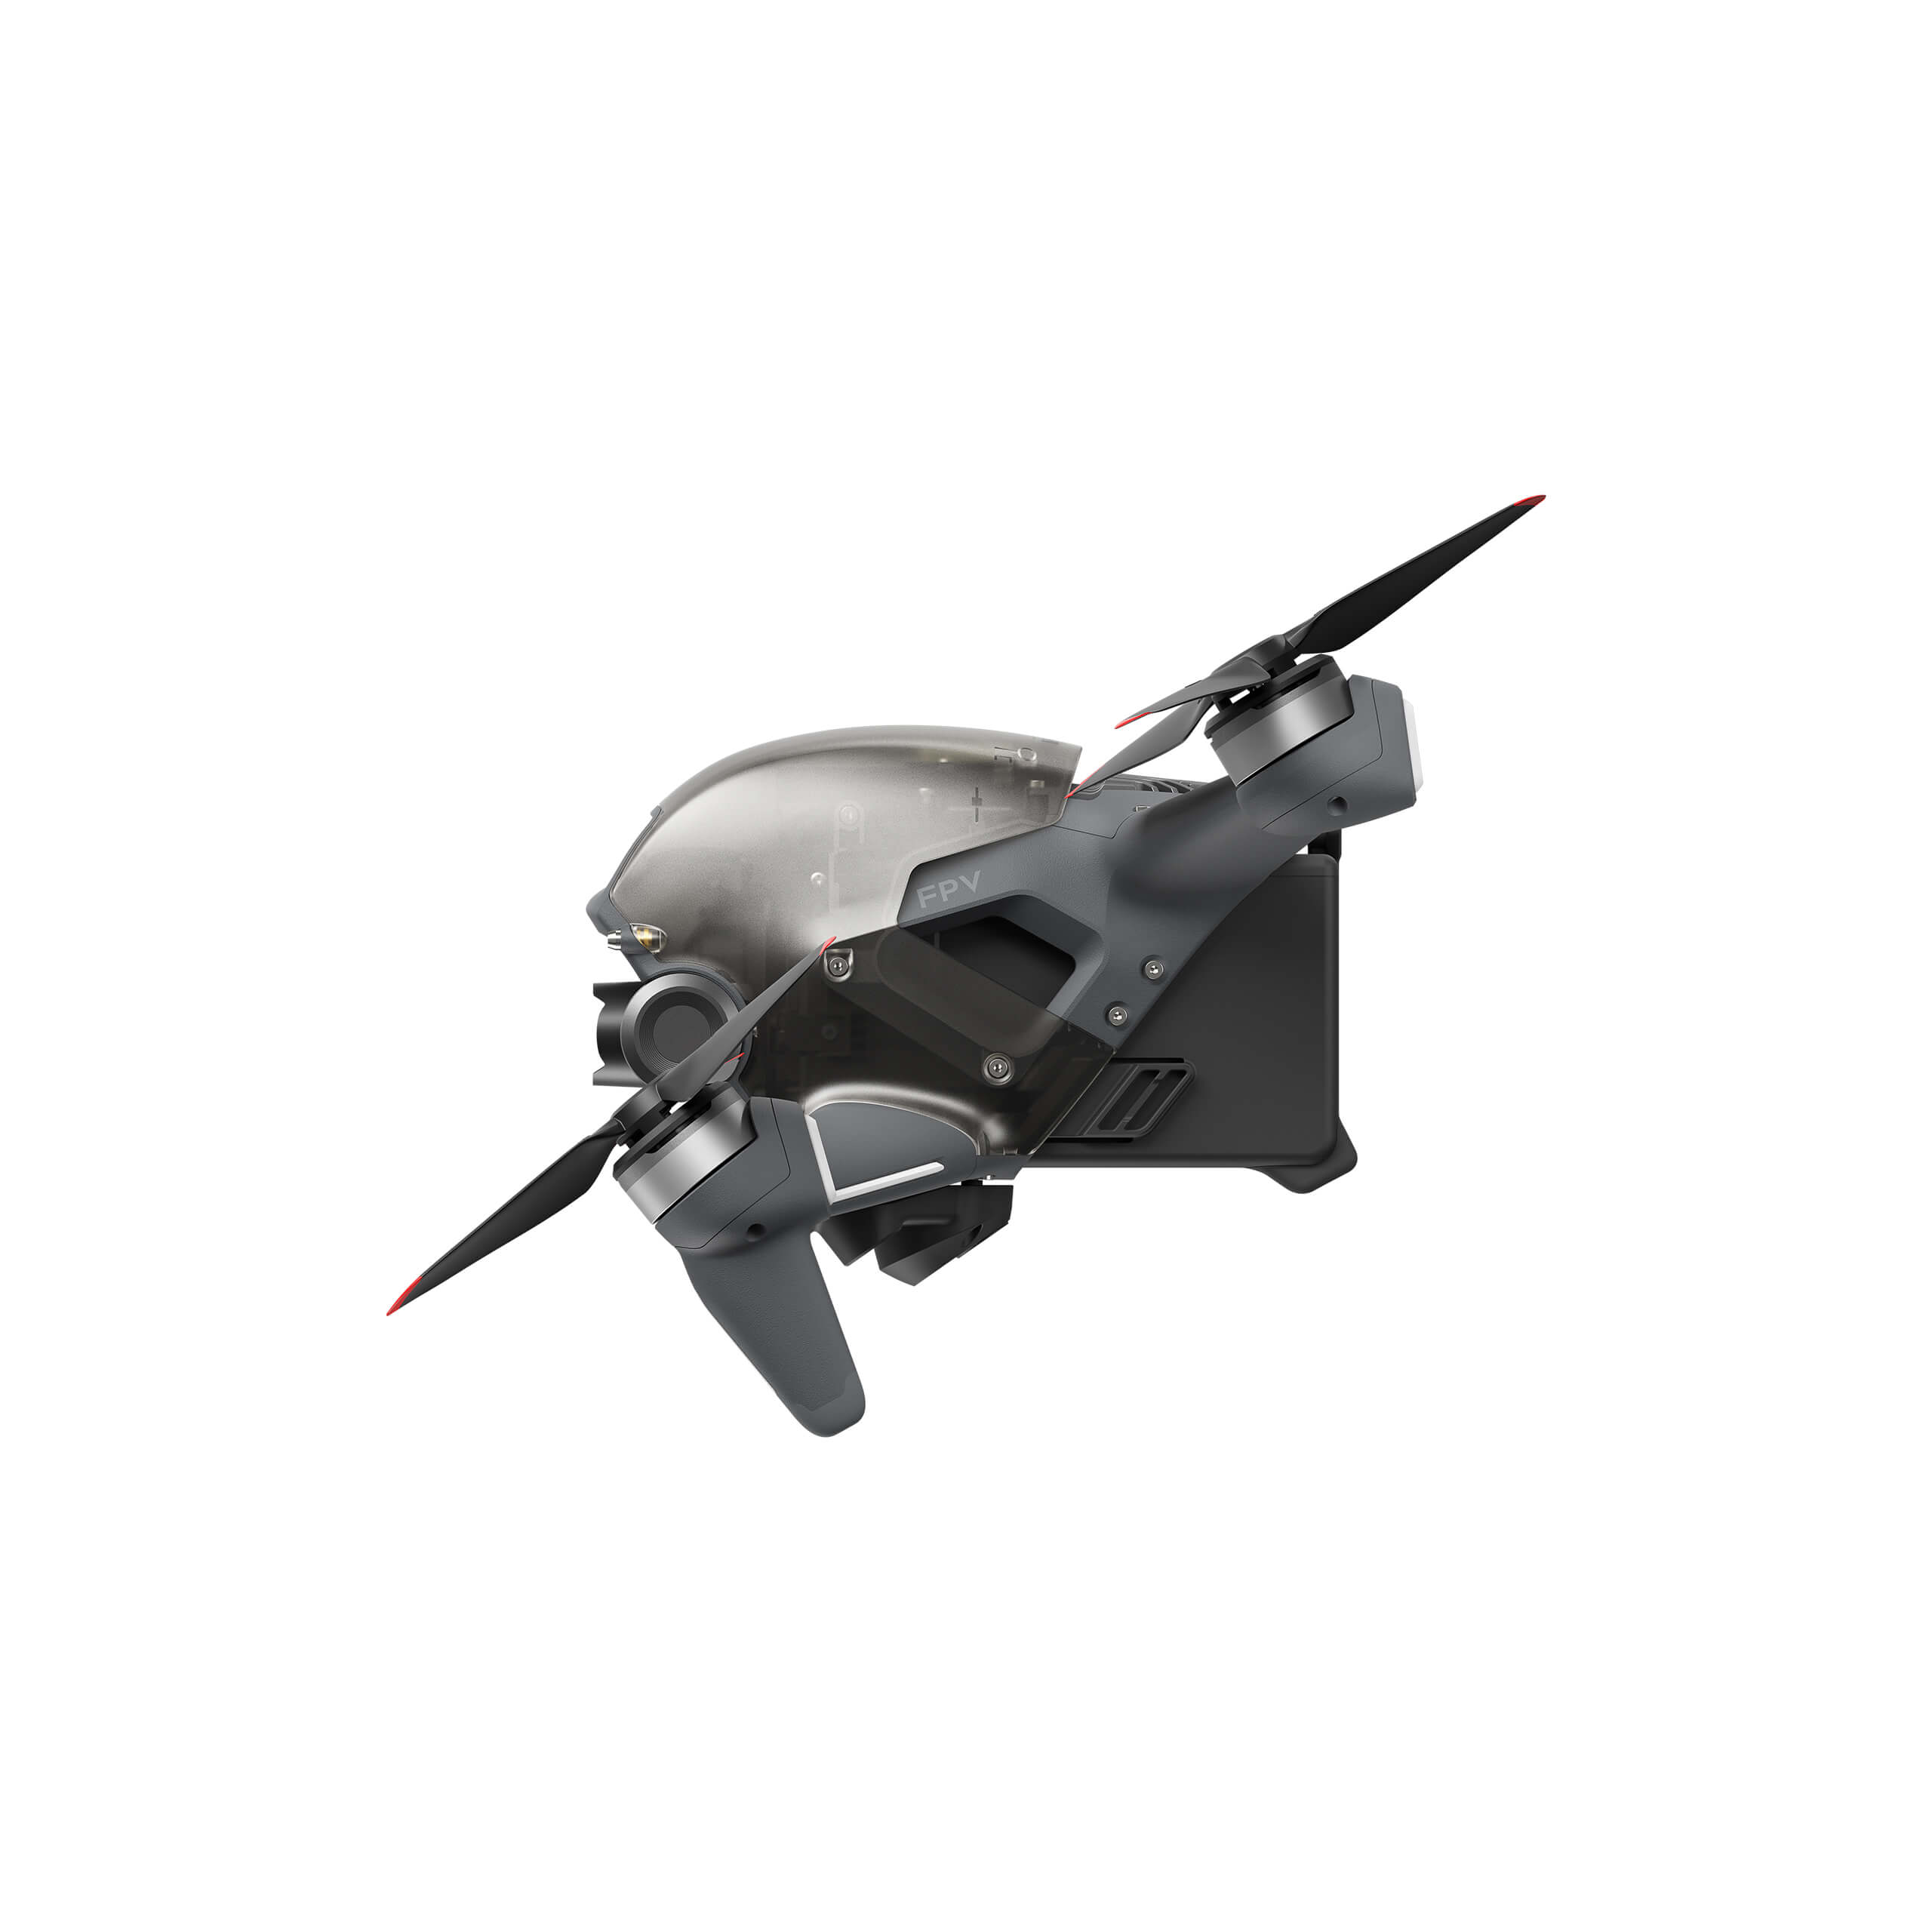  Combo DJI FPV - Drone cuadricóptero, RPAS con cámara